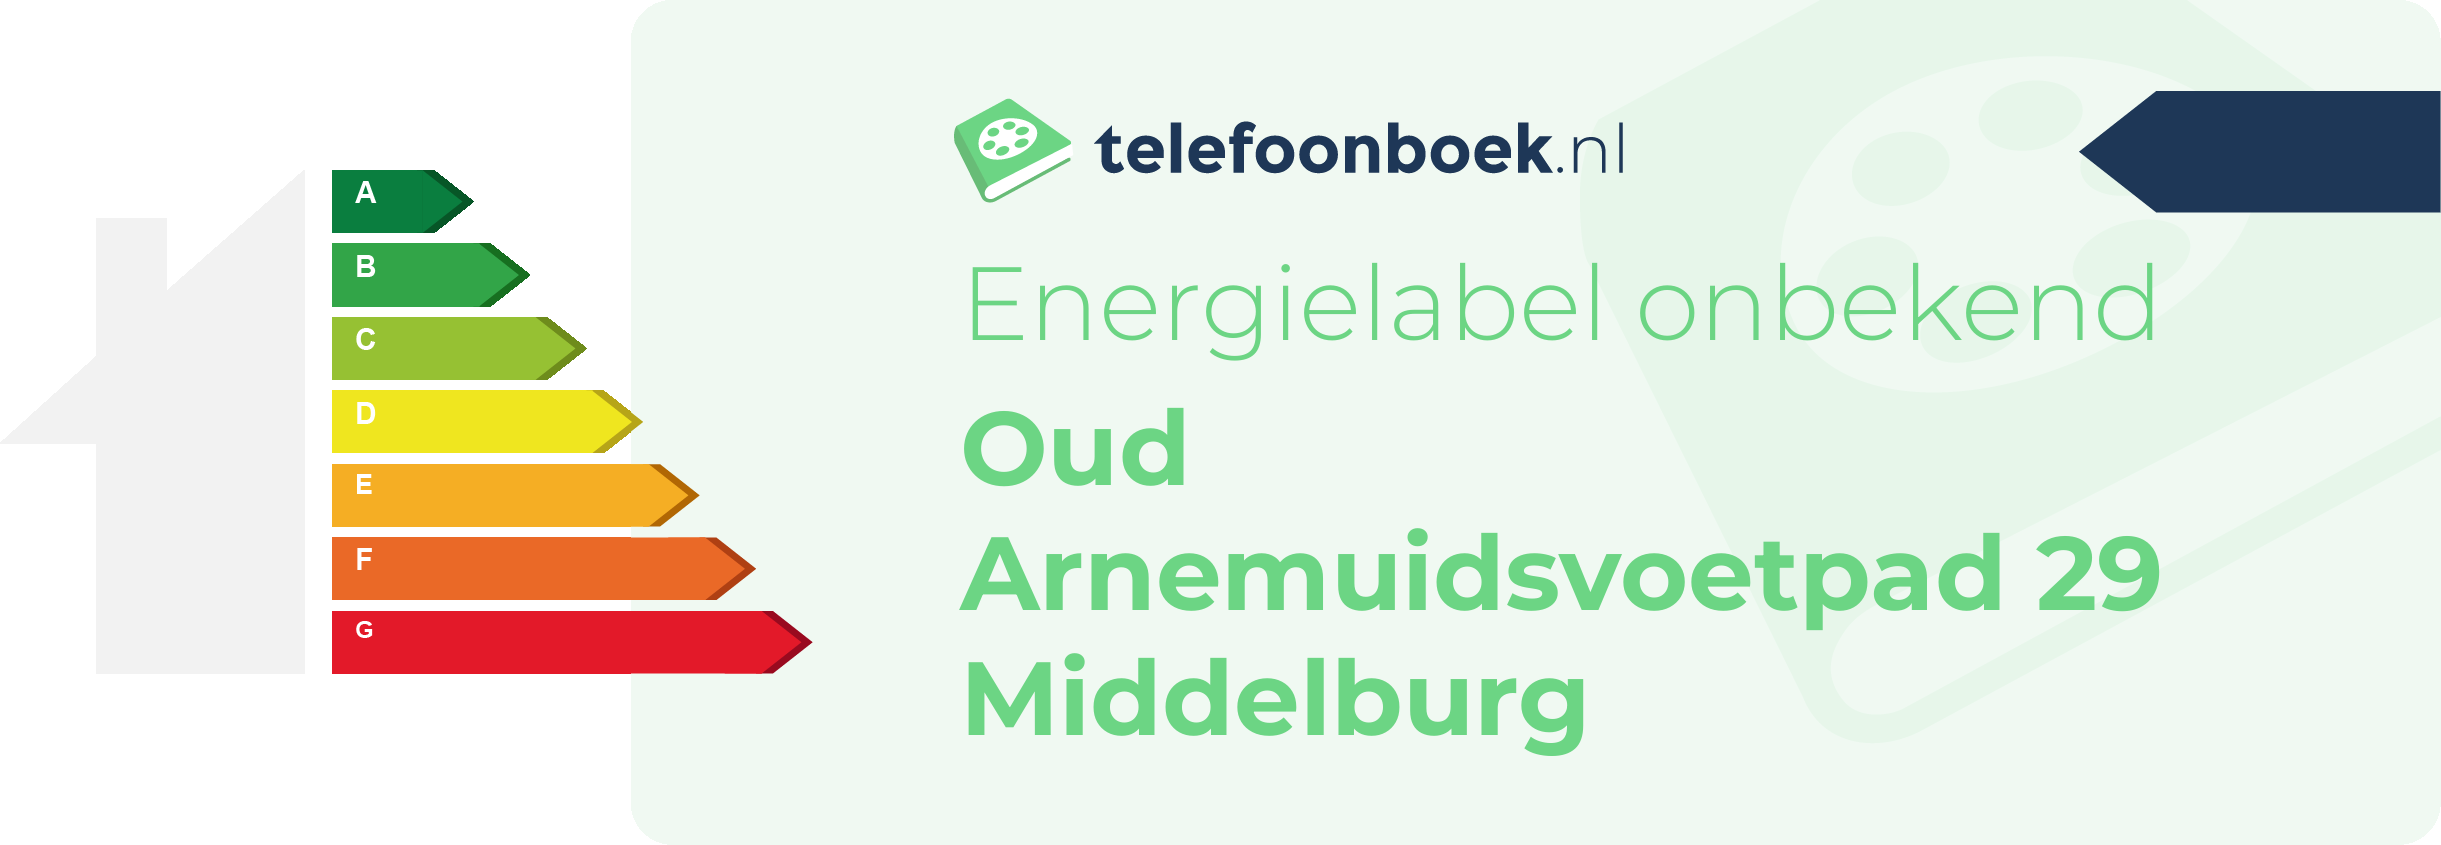 Energielabel Oud Arnemuidsvoetpad 29 Middelburg